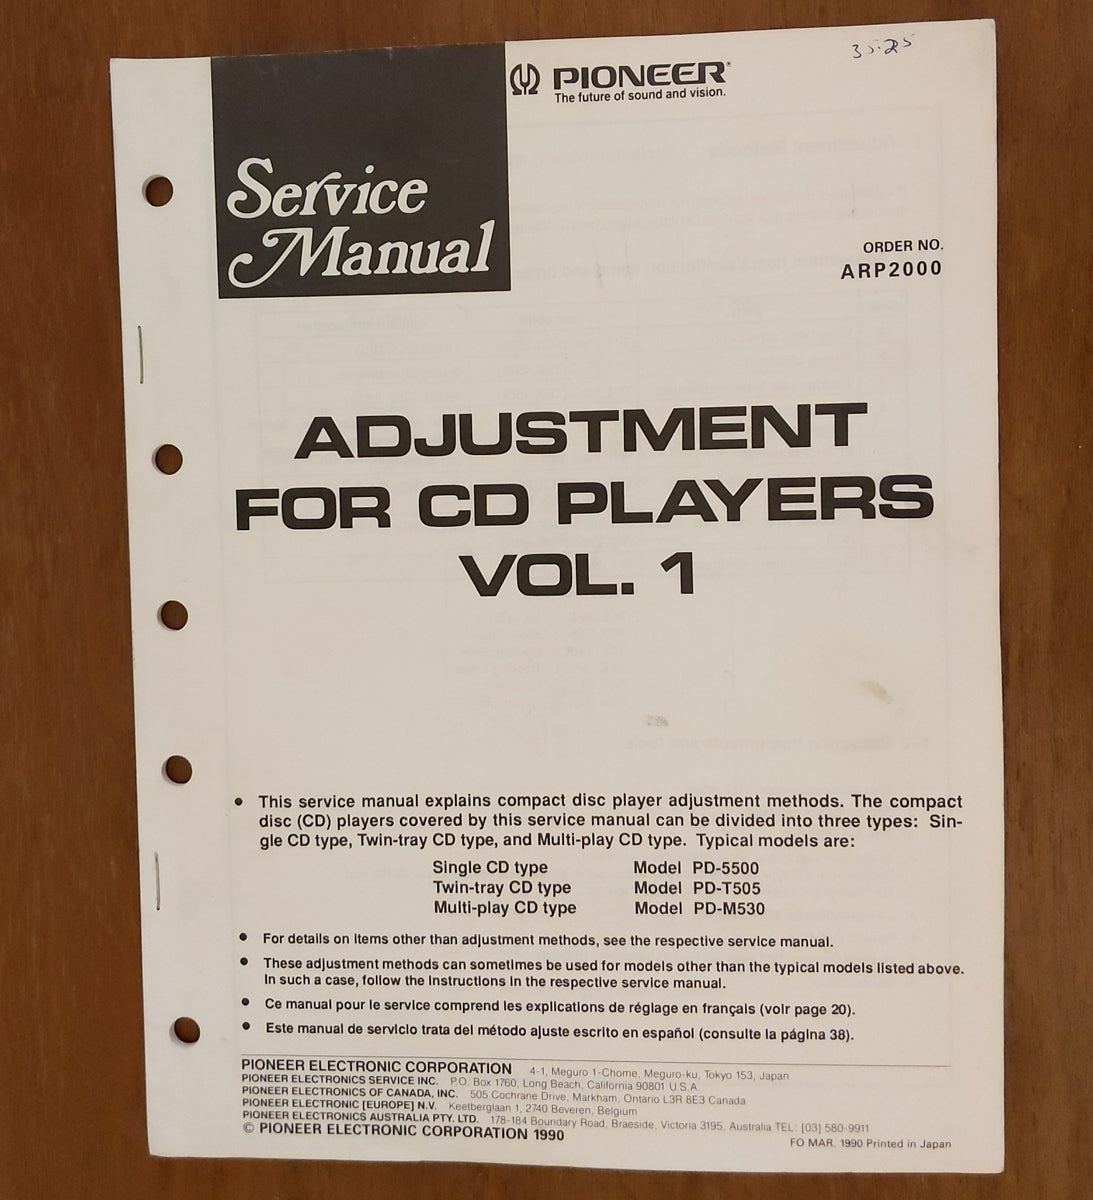 Pioneer Adjustment for CD Players Vol. 1  Service Manual *Original*